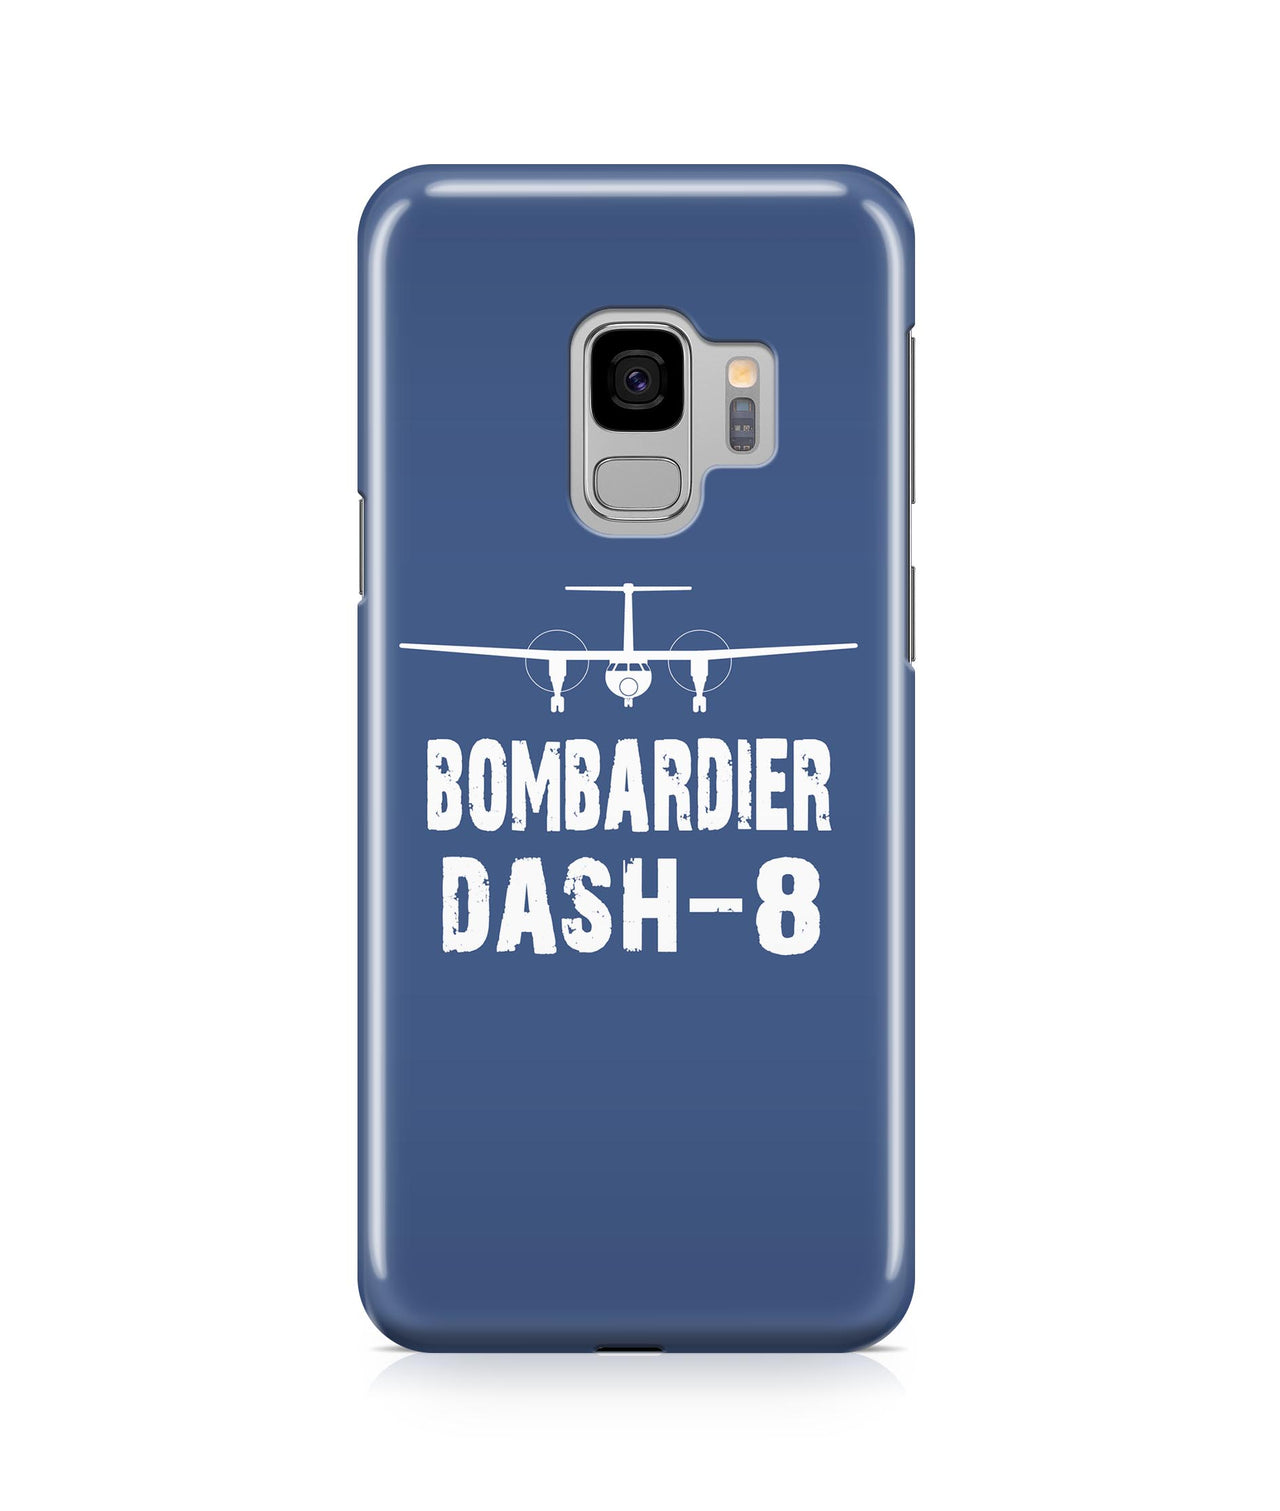 Bombardier Dash-8 Plane & Designed Samsung J Cases